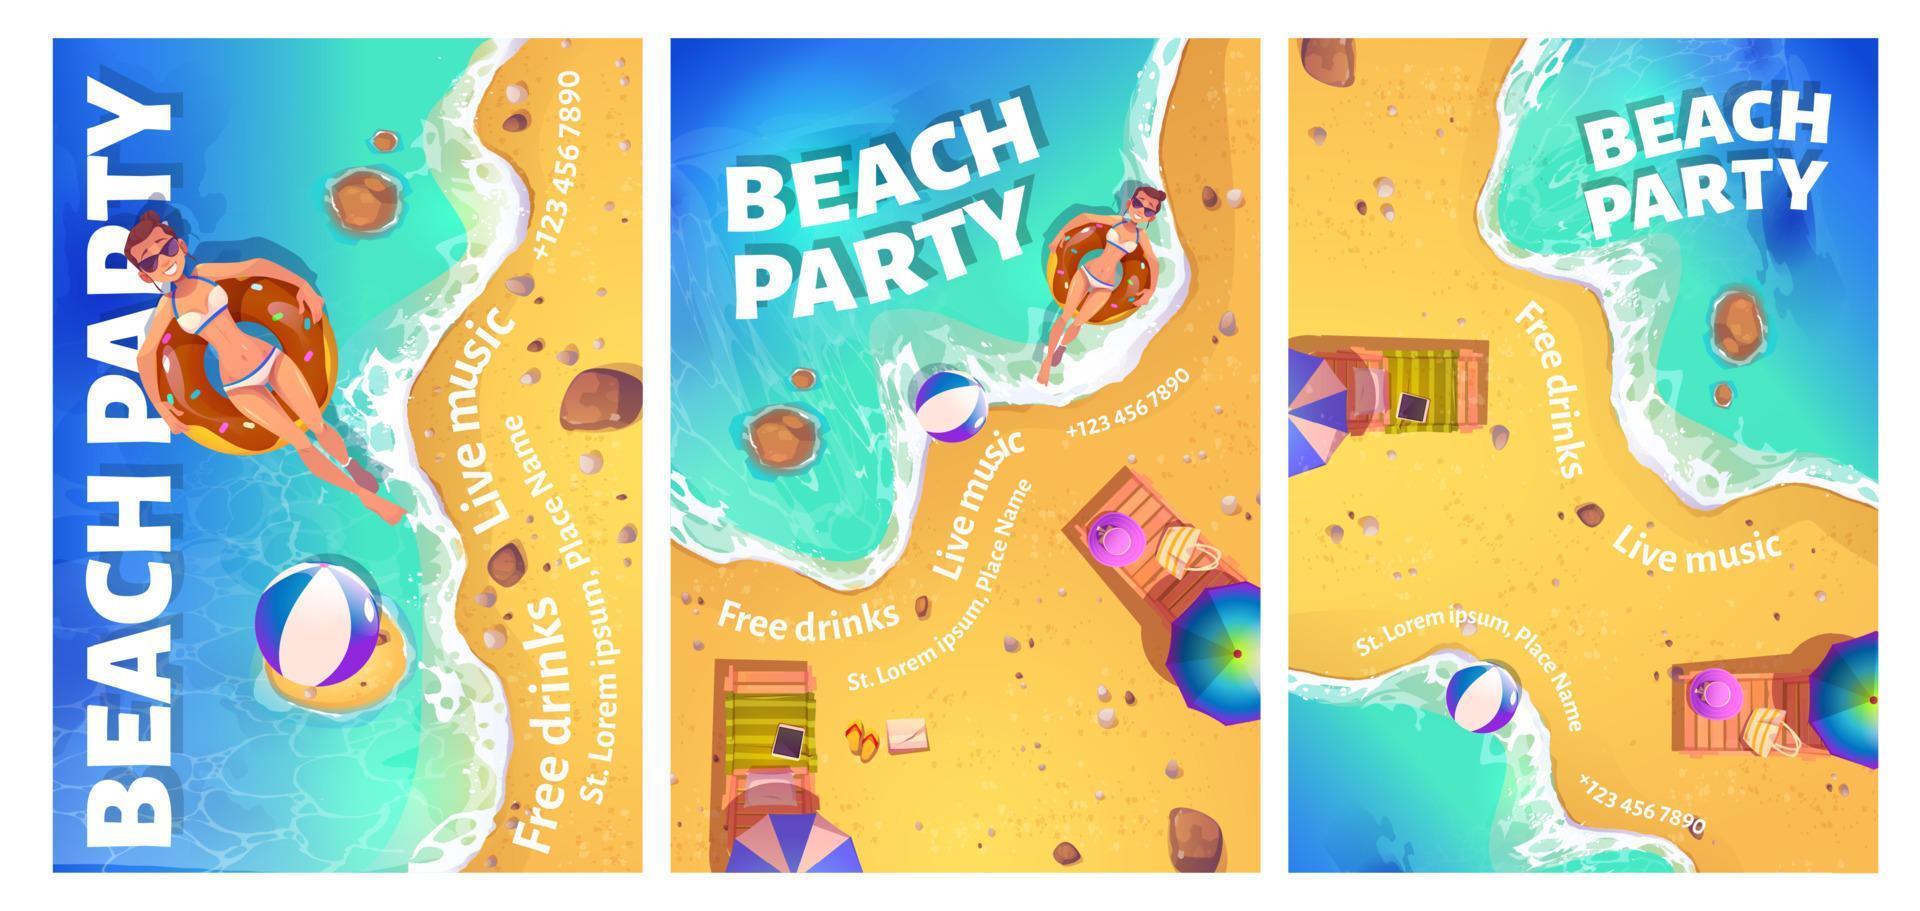 Beach party cartoon flyer with woman in ocean vector